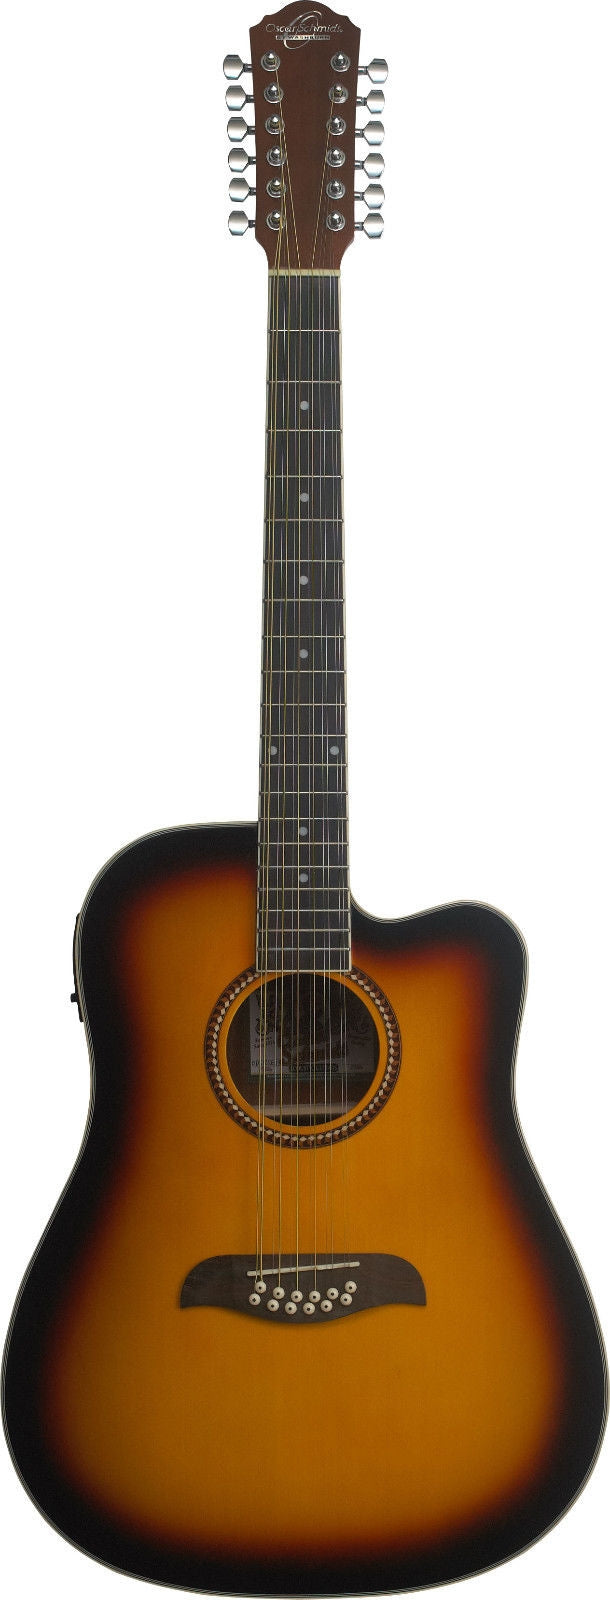 Guitarra Electroacustica Oscar Schmidt 12cdas. Sombreada, Od312cetos